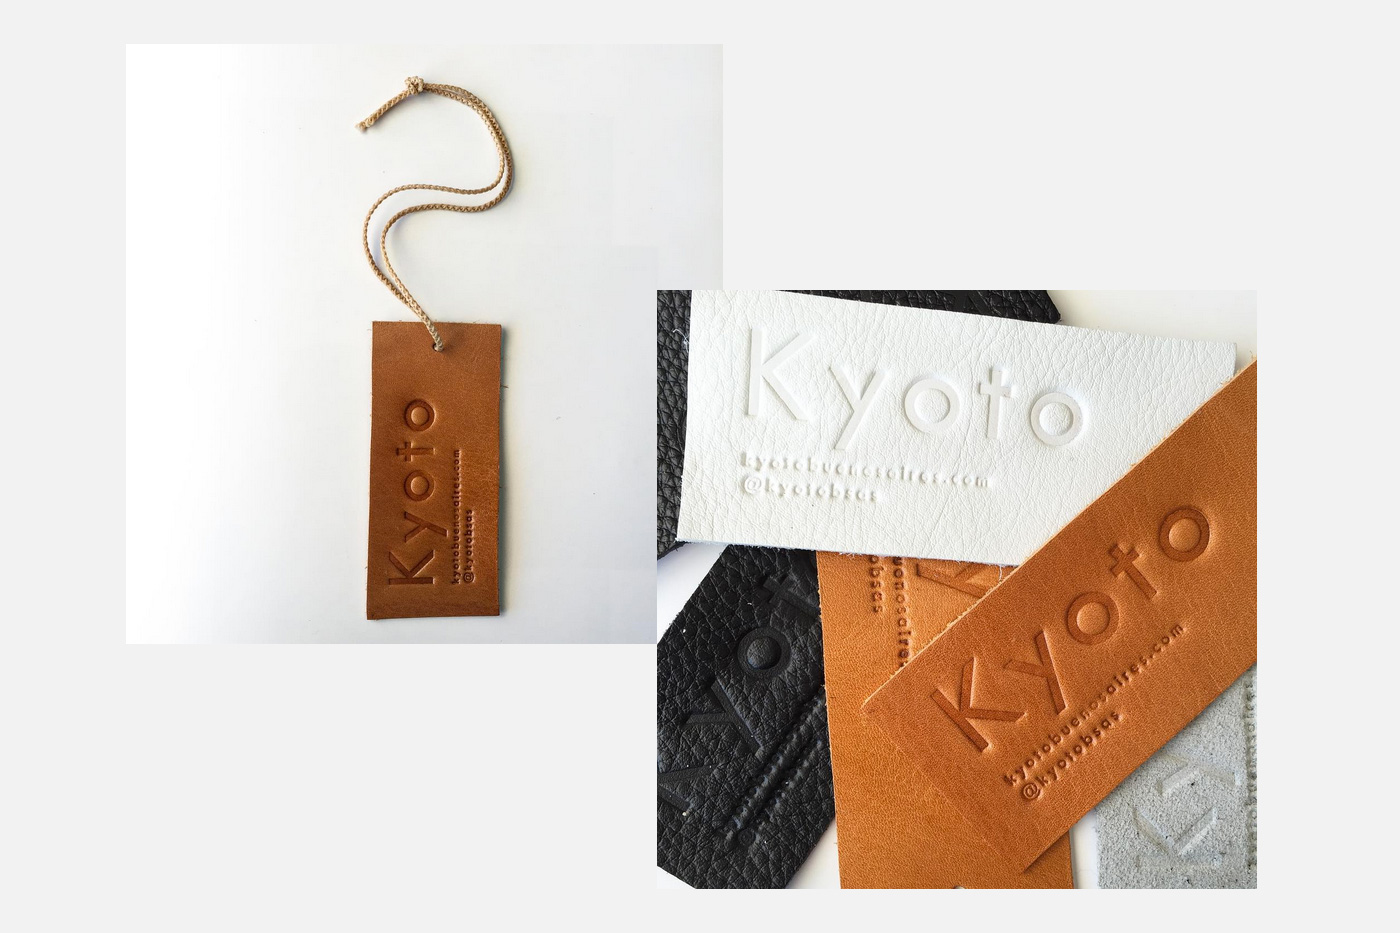 kyoto bags Fashion  design branding  Style logo leather